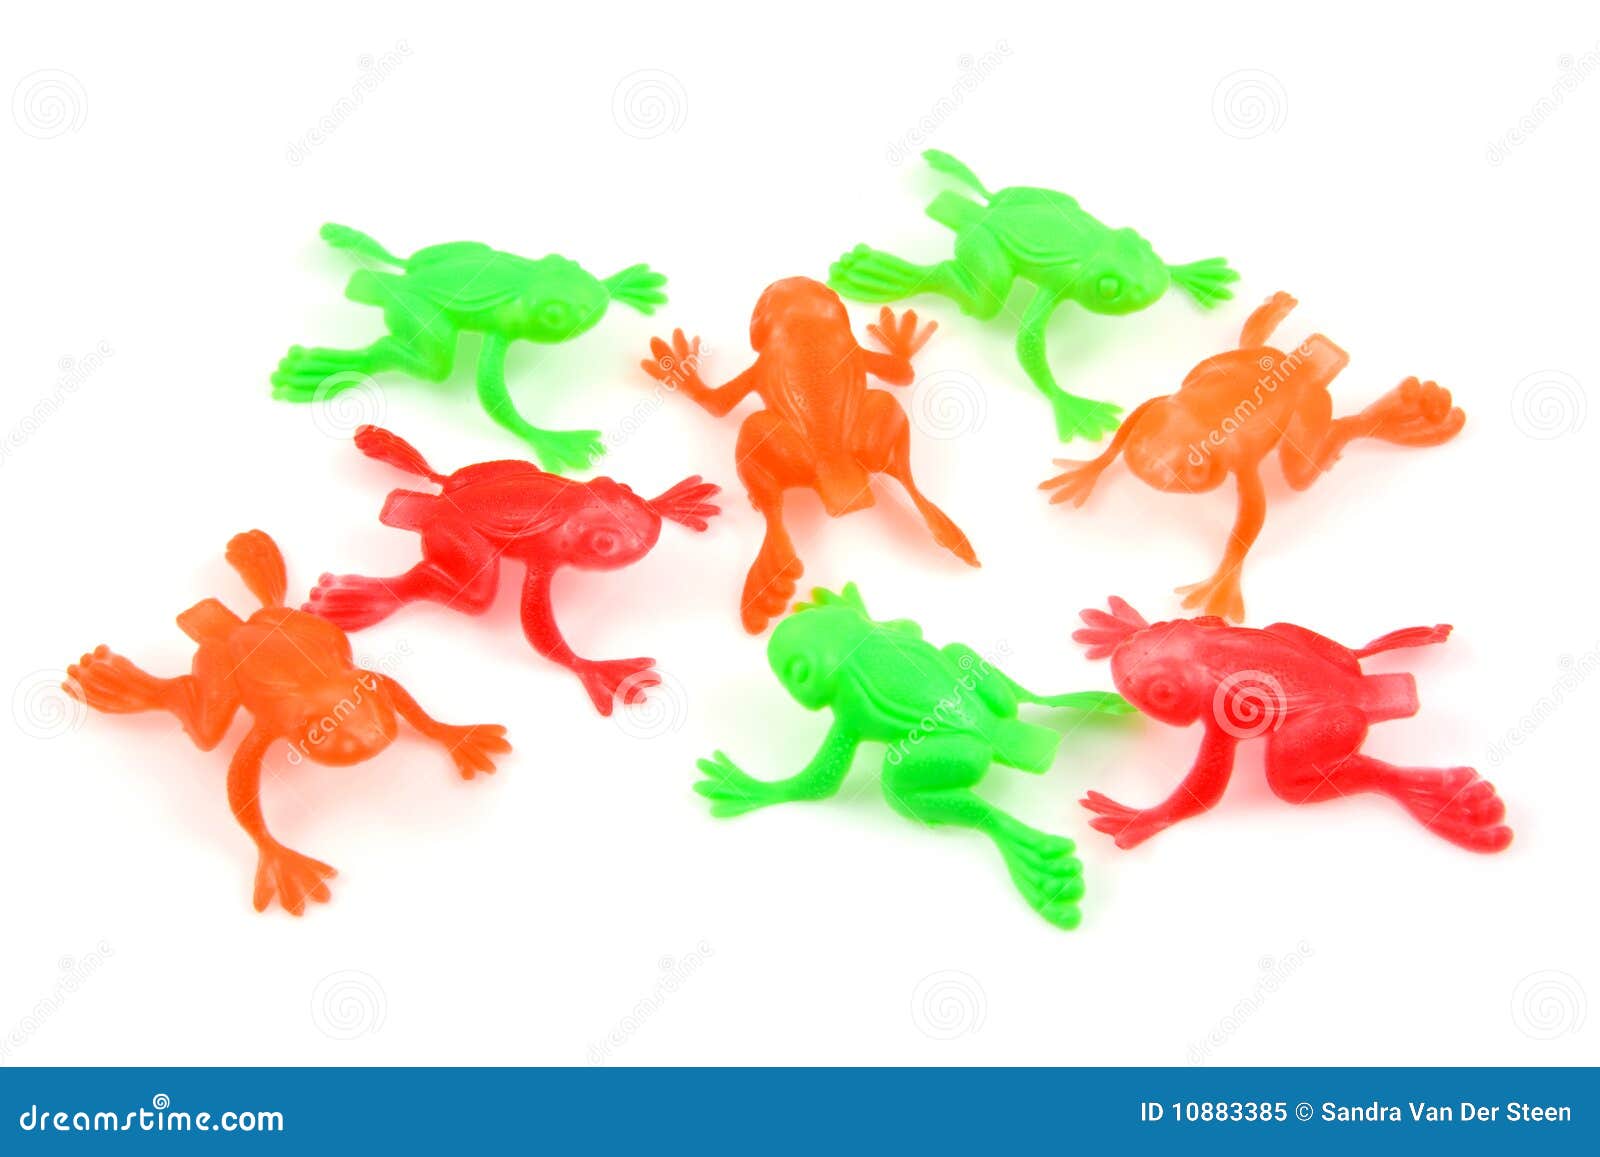 1,050 Plastic Frog Stock Photos - Free & Royalty-Free Stock Photos